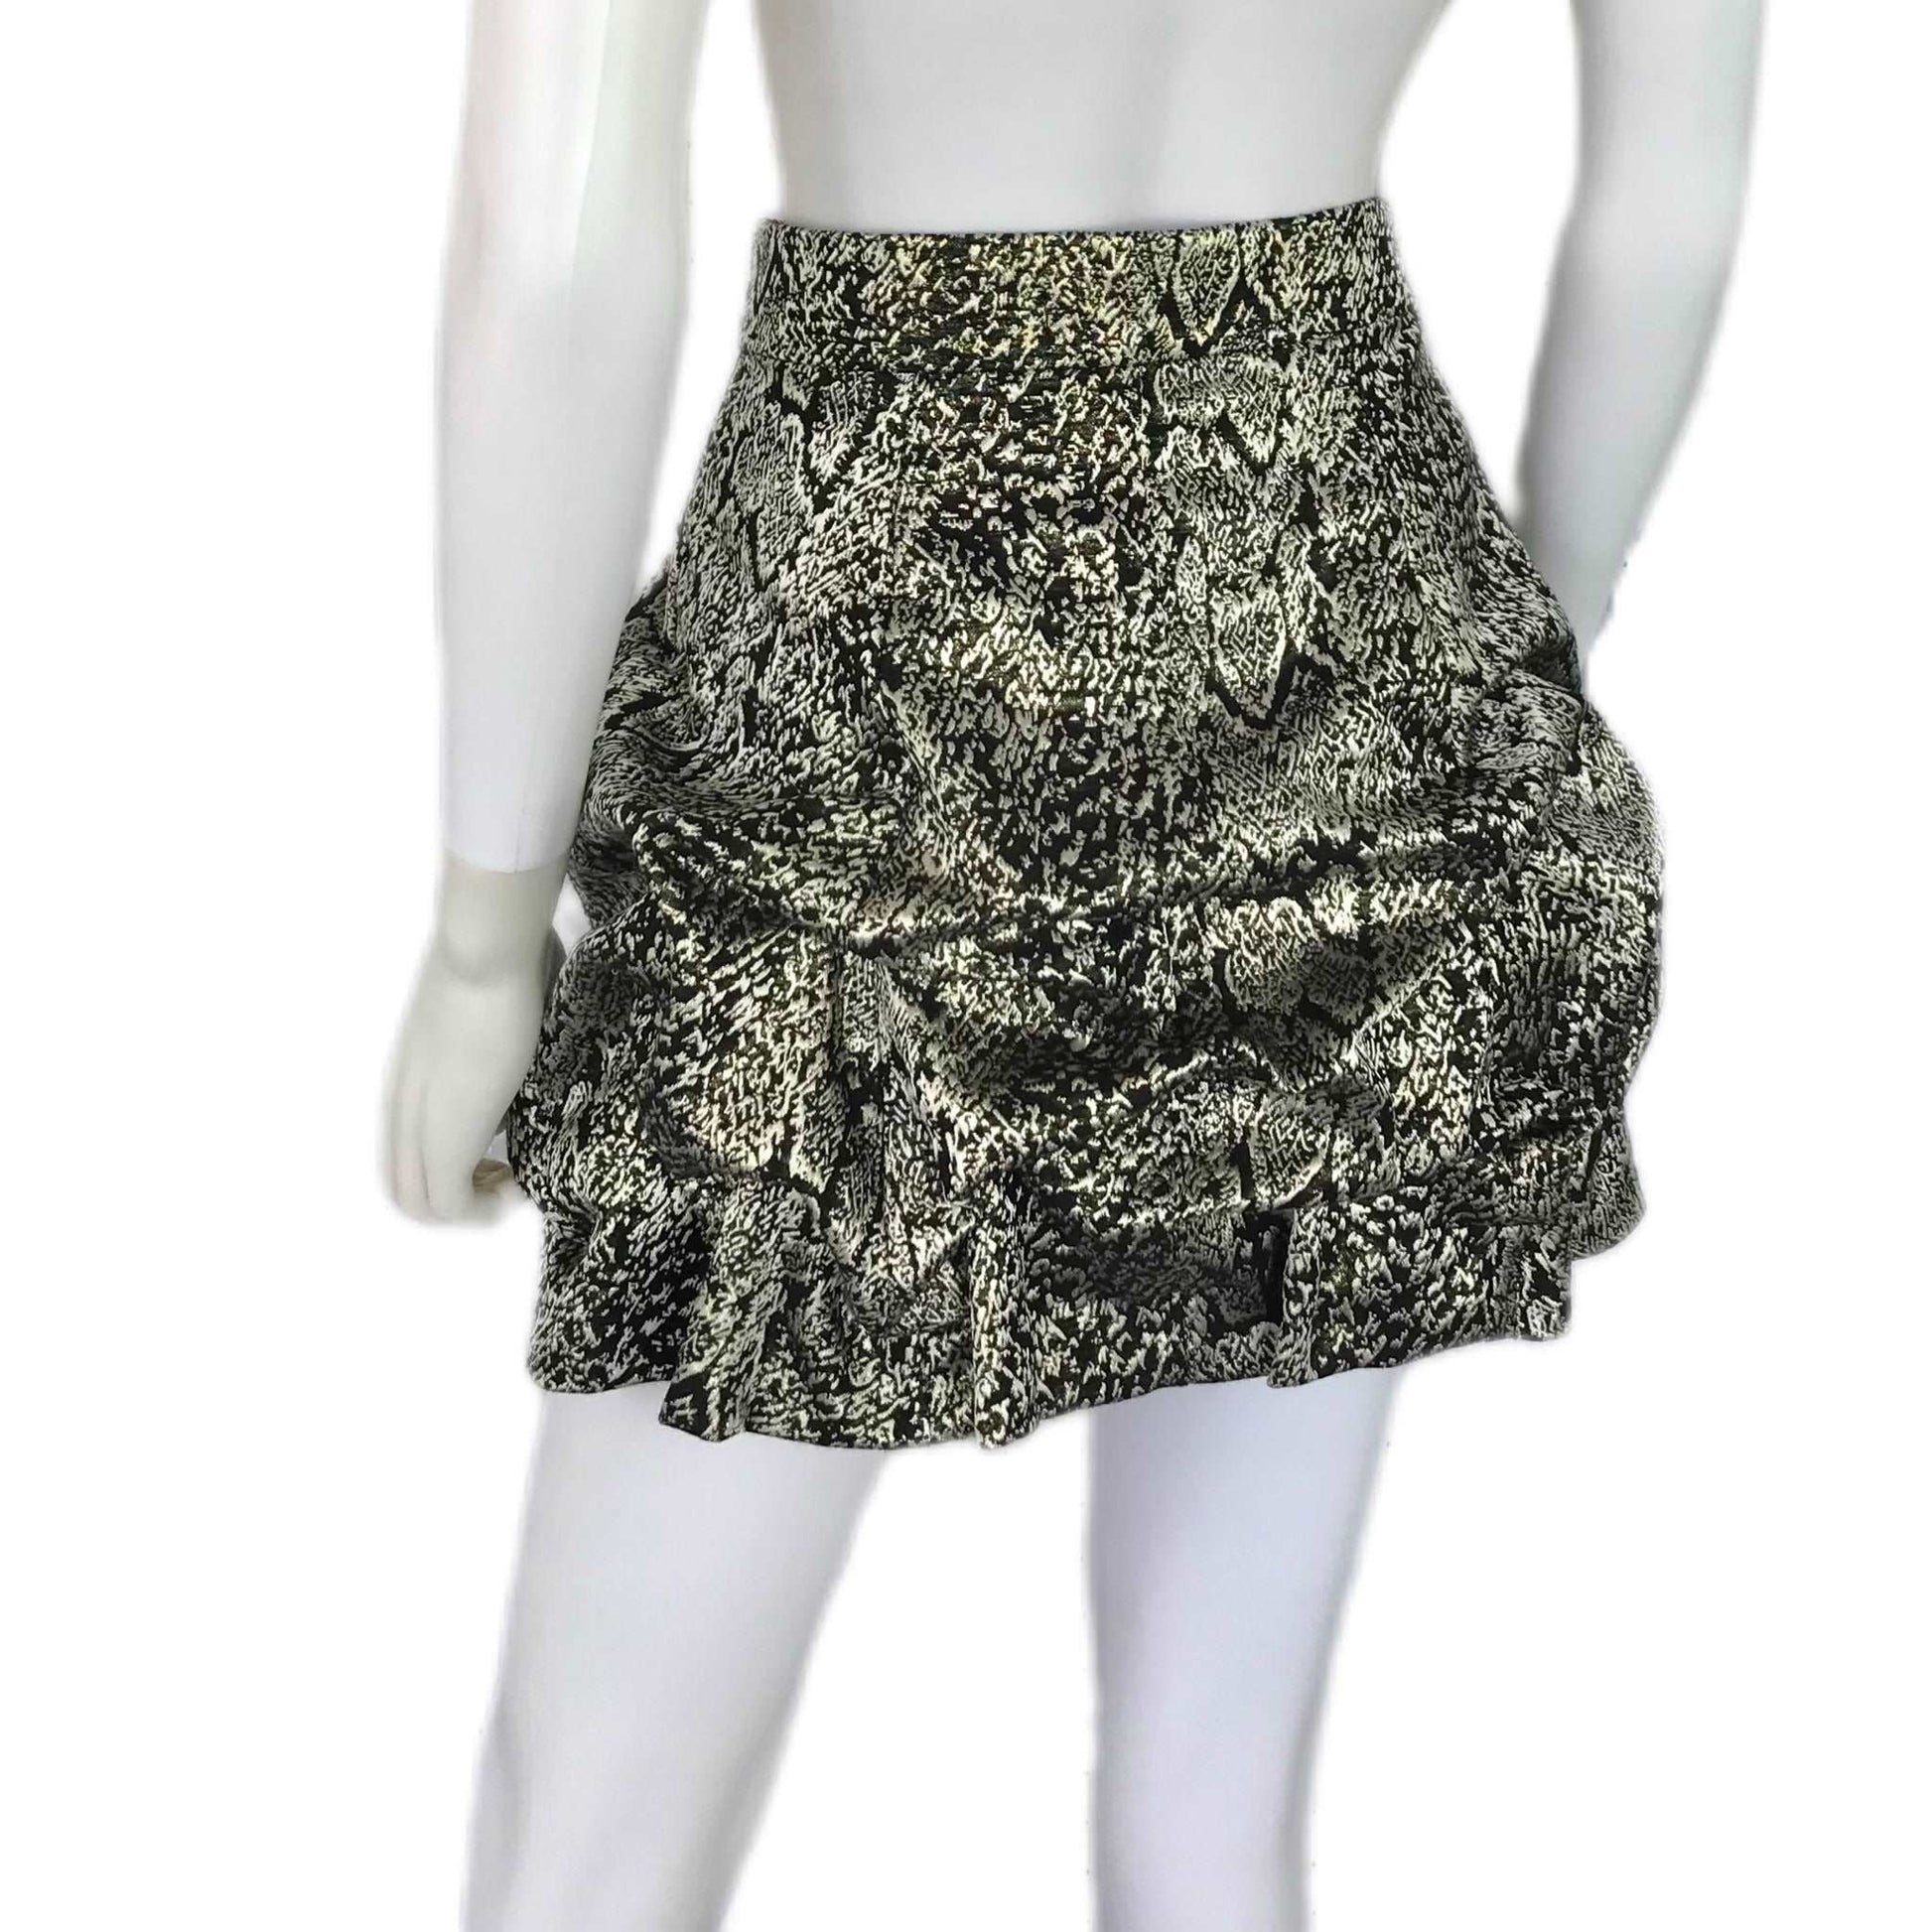 Women's Mini Skirt in Metallic Snake print - Pinched Draping - Size 2